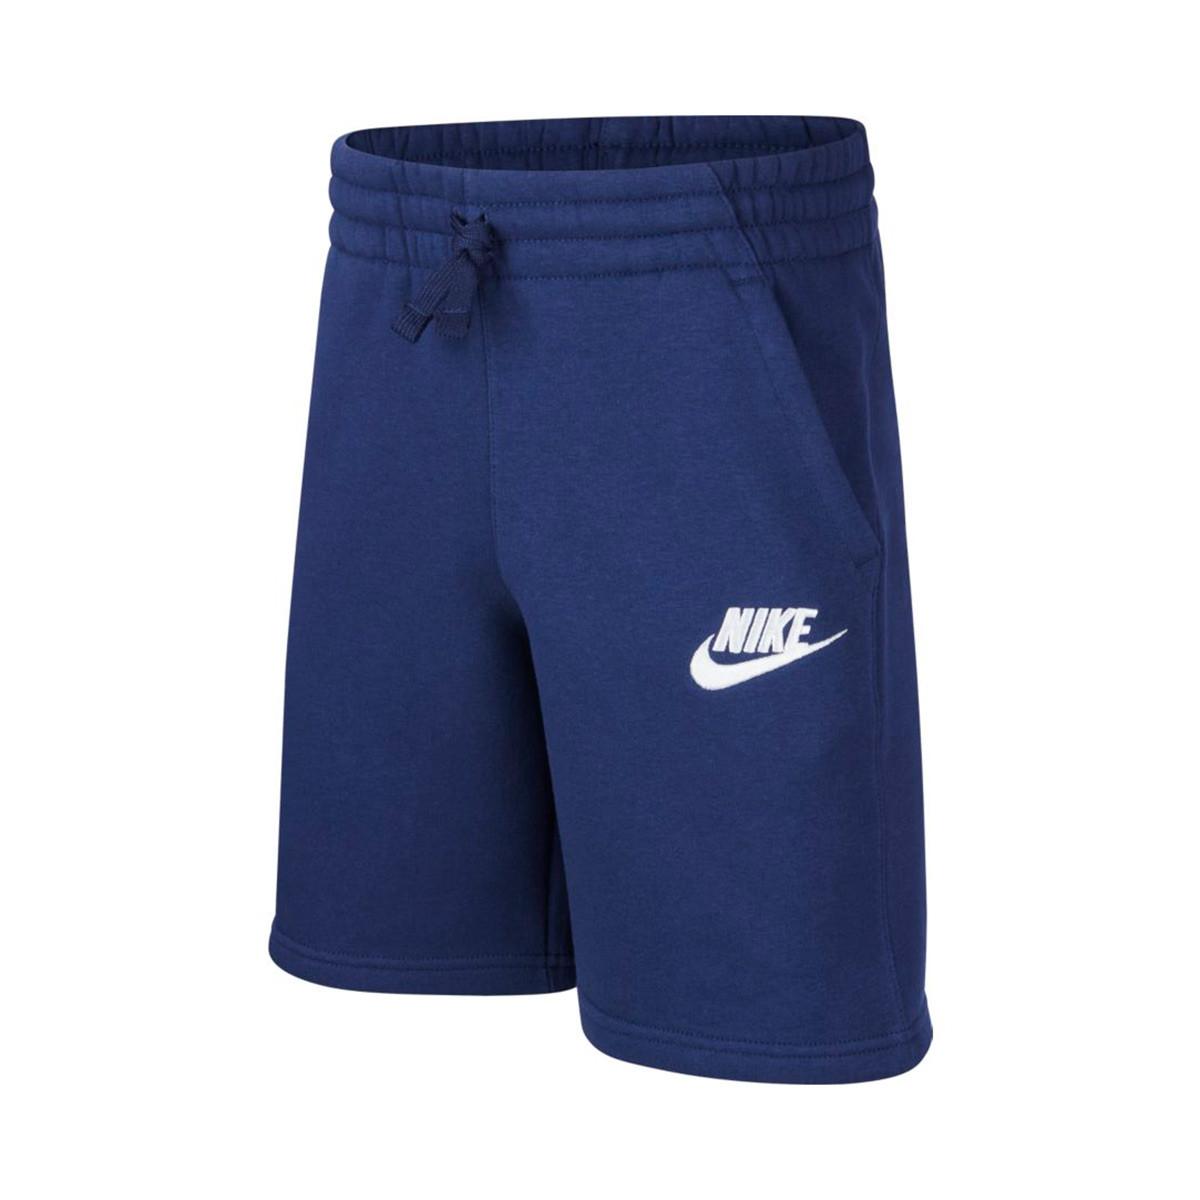 Shorts Nike Kids Club Fleece Midnight 